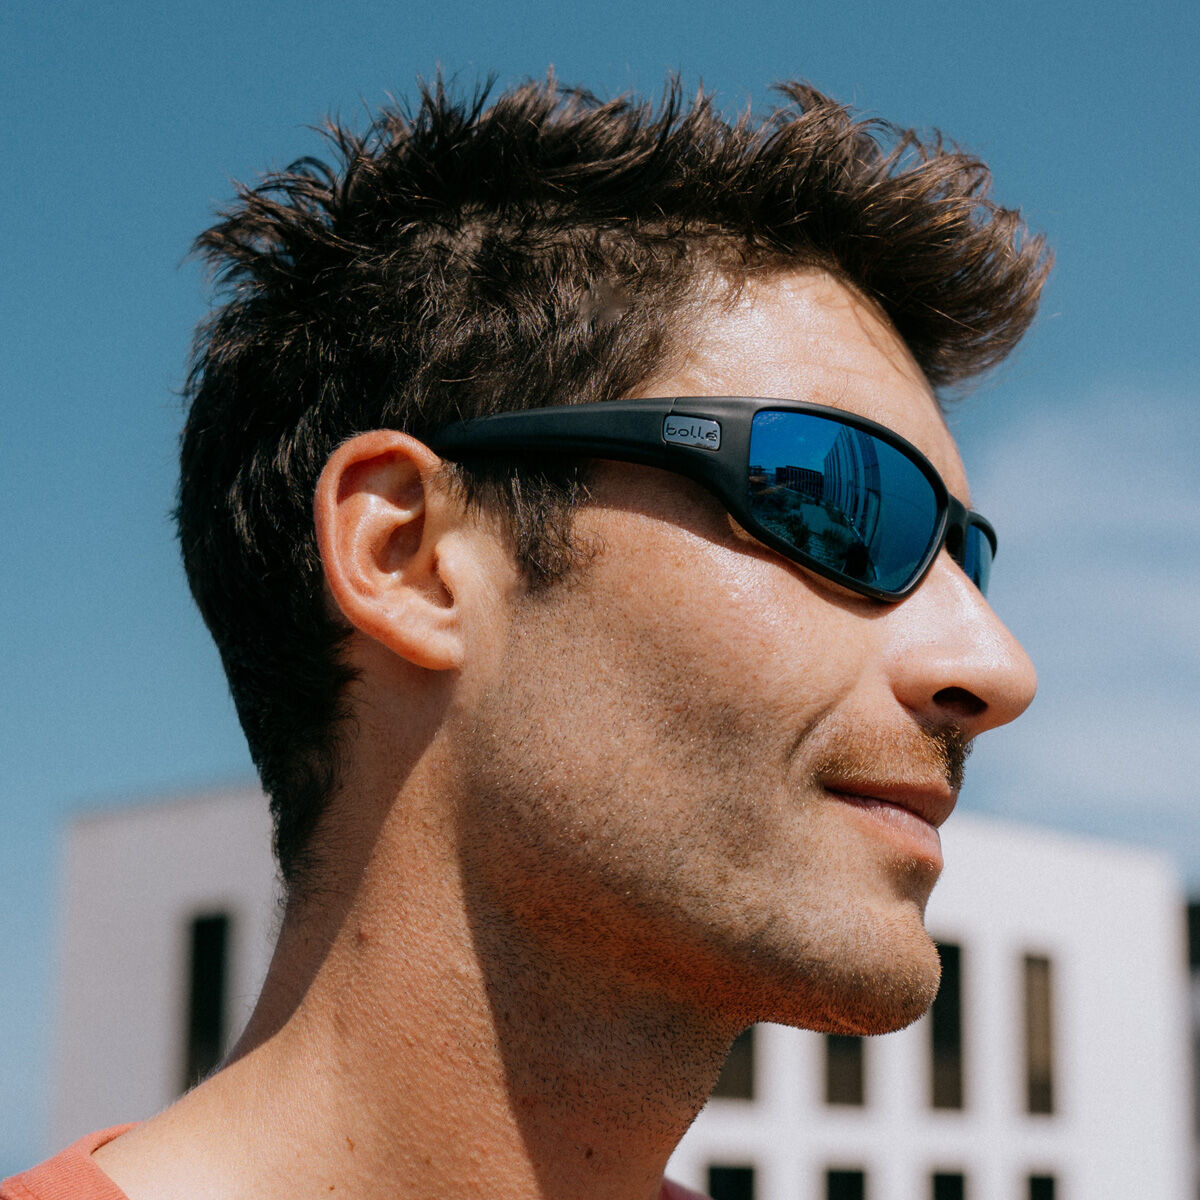 Bolle Sunglasses Polarized Sporty Safety Glasses UV protection Anti-glare  Lens | eBay